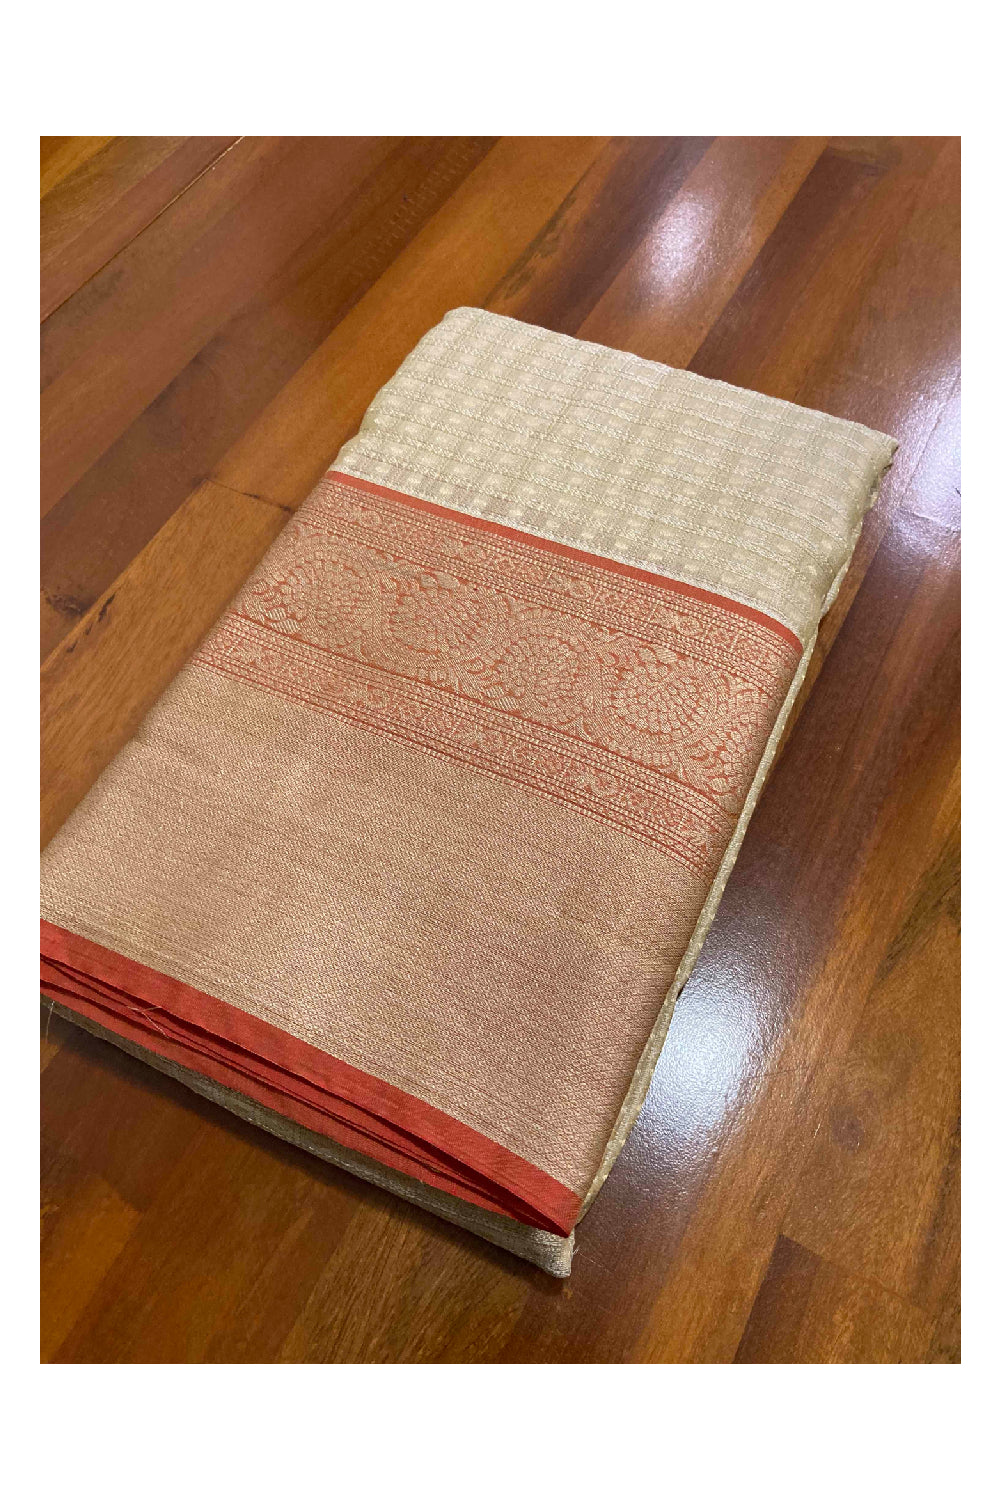 Southloom Handloom Pure Silk Kanchipuram Saree in Beige Zari Motifs